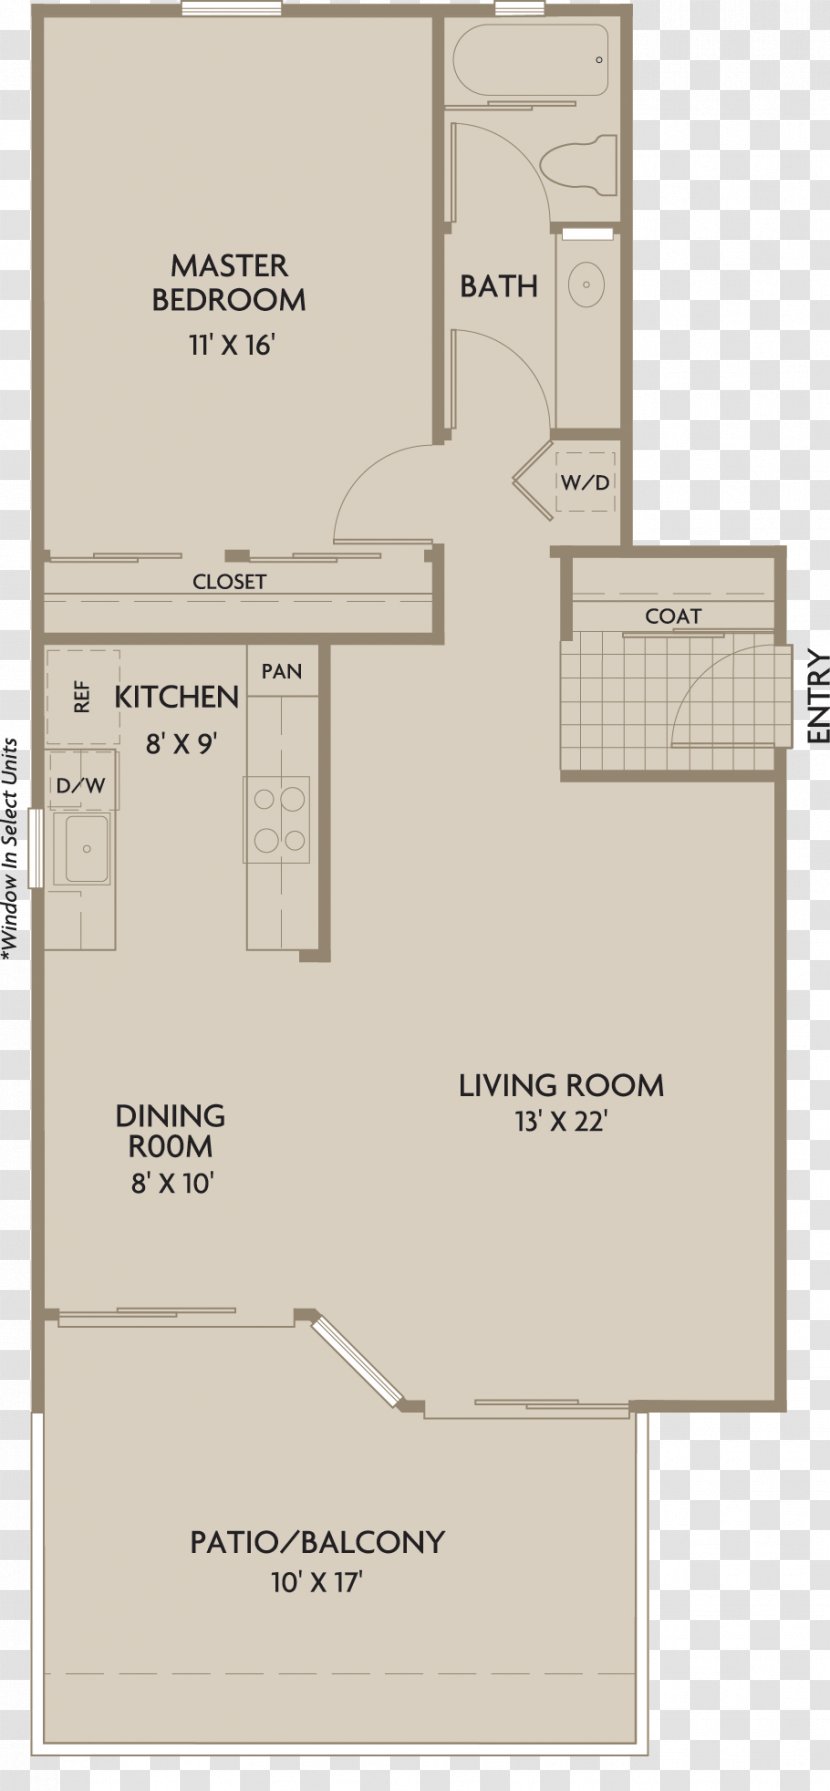 Floor Plan Angle - Schematic - Design Transparent PNG